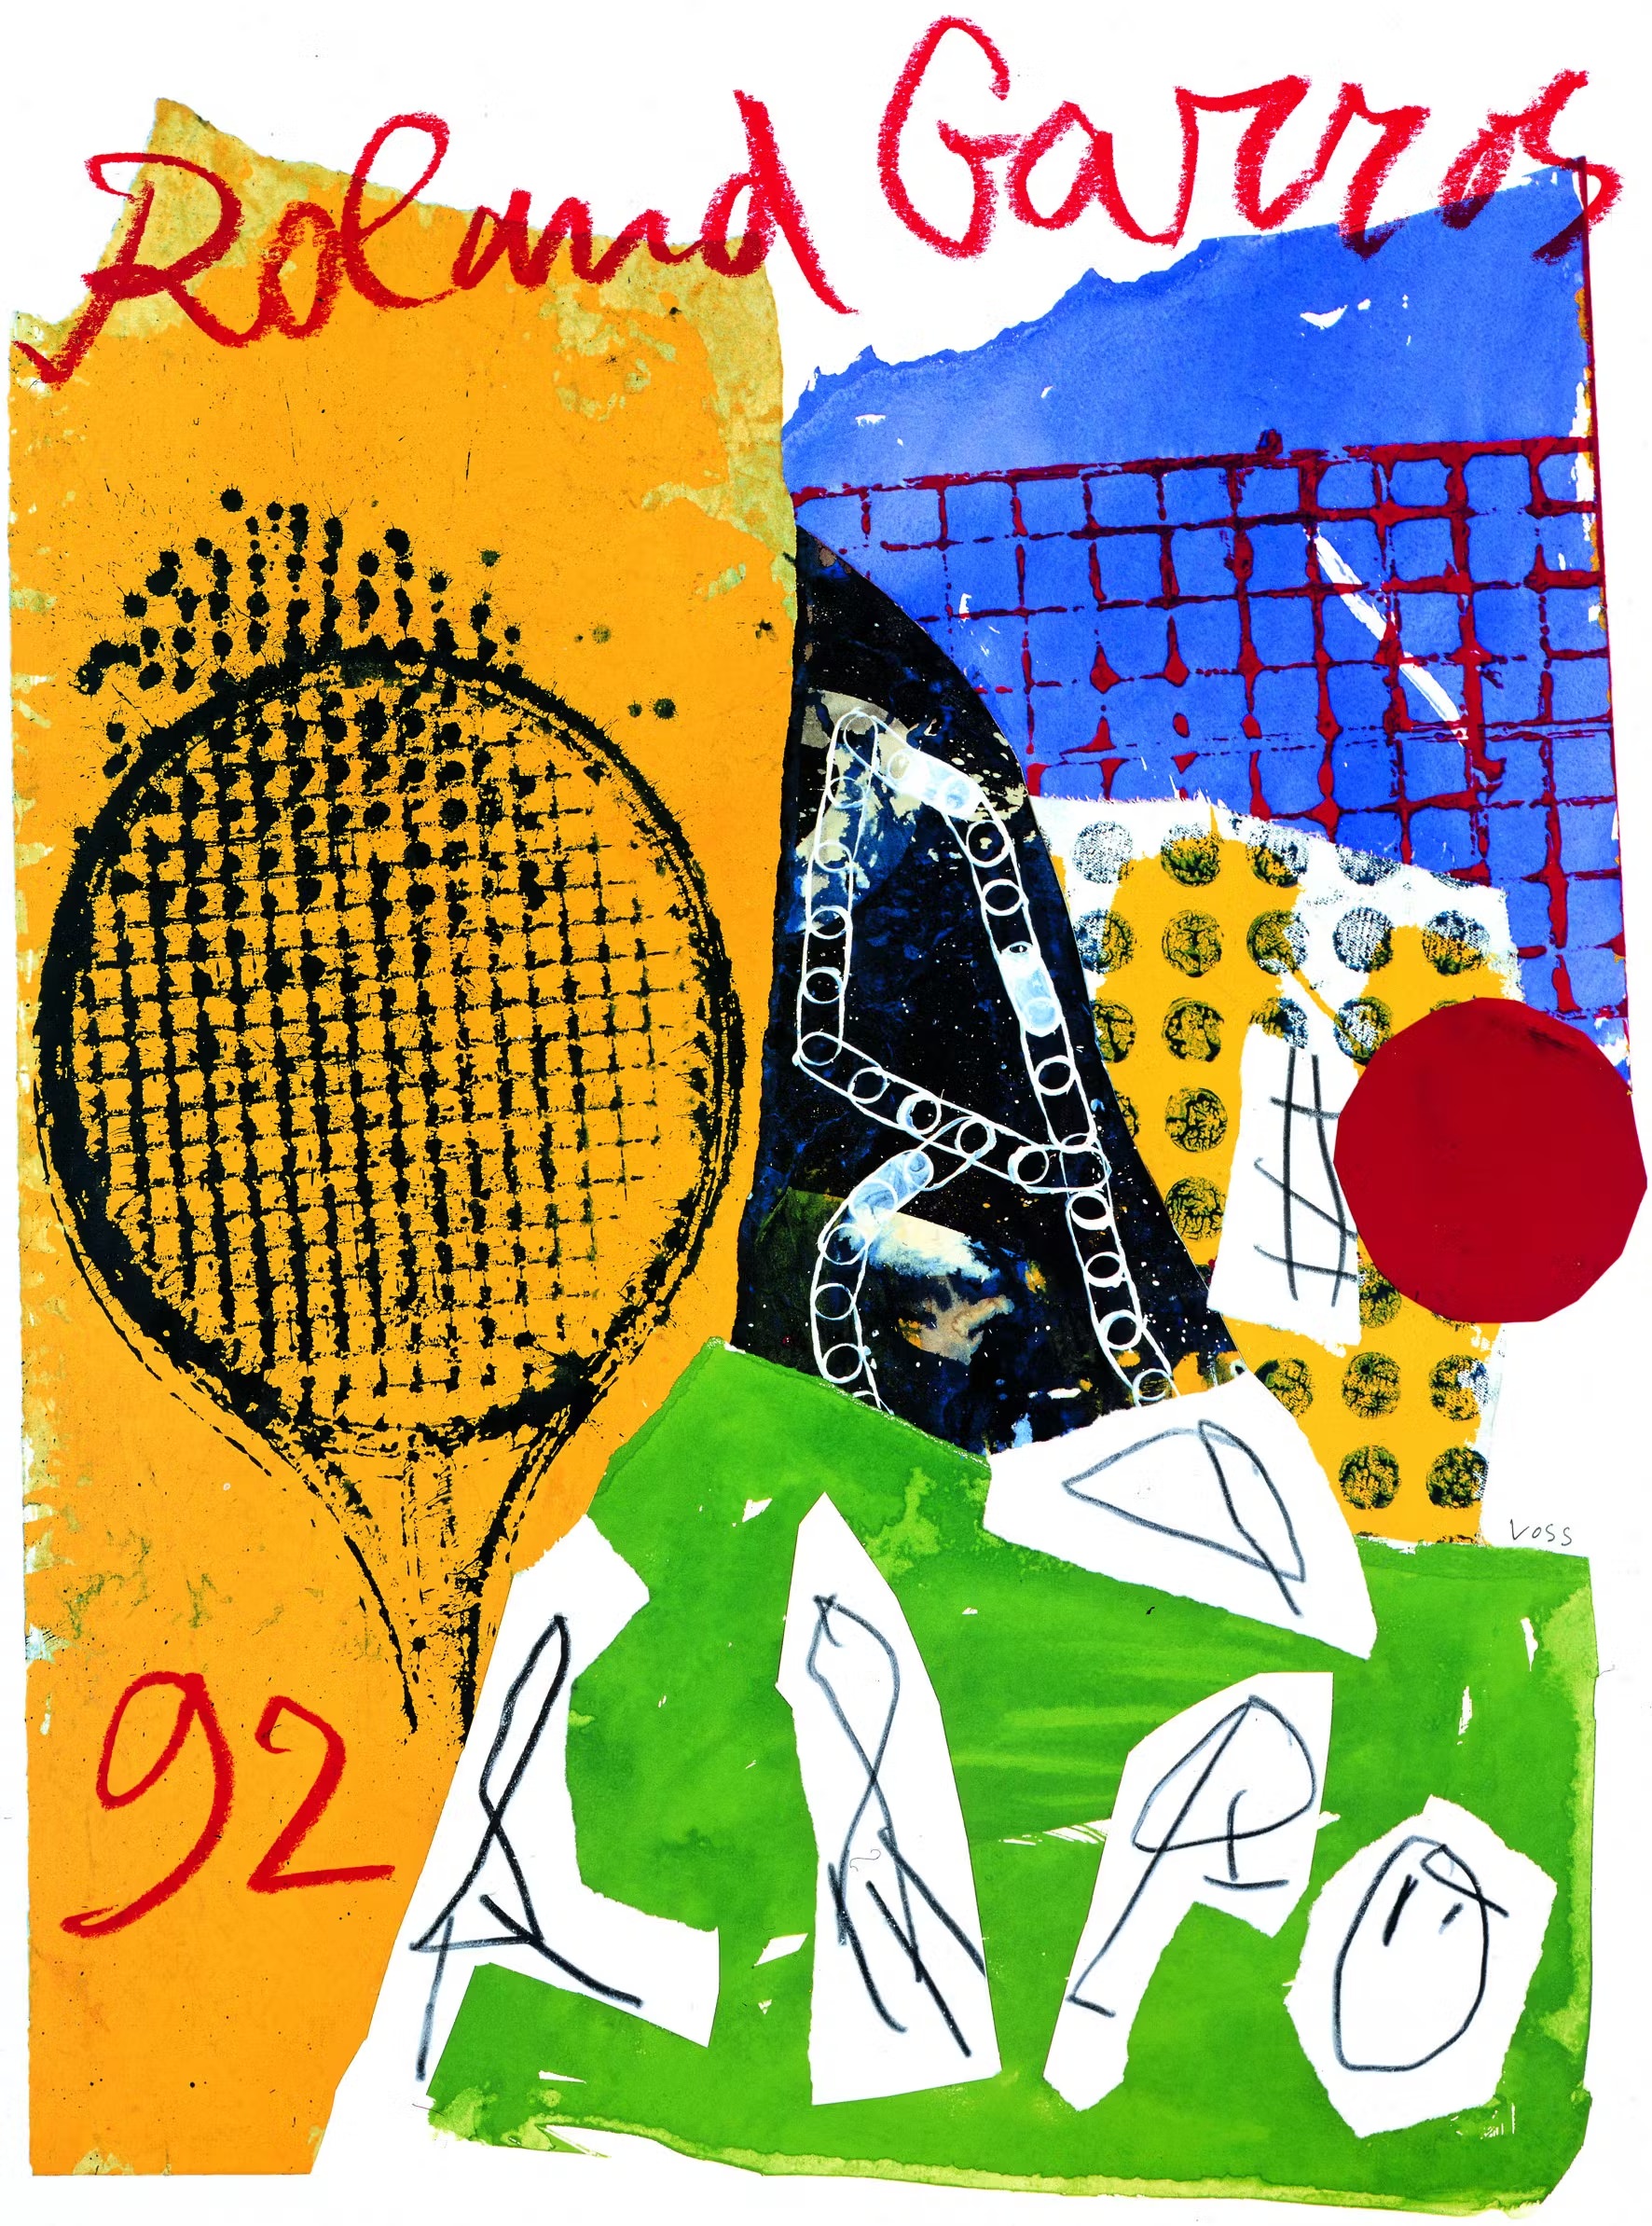 Roland Garros 1992 poster